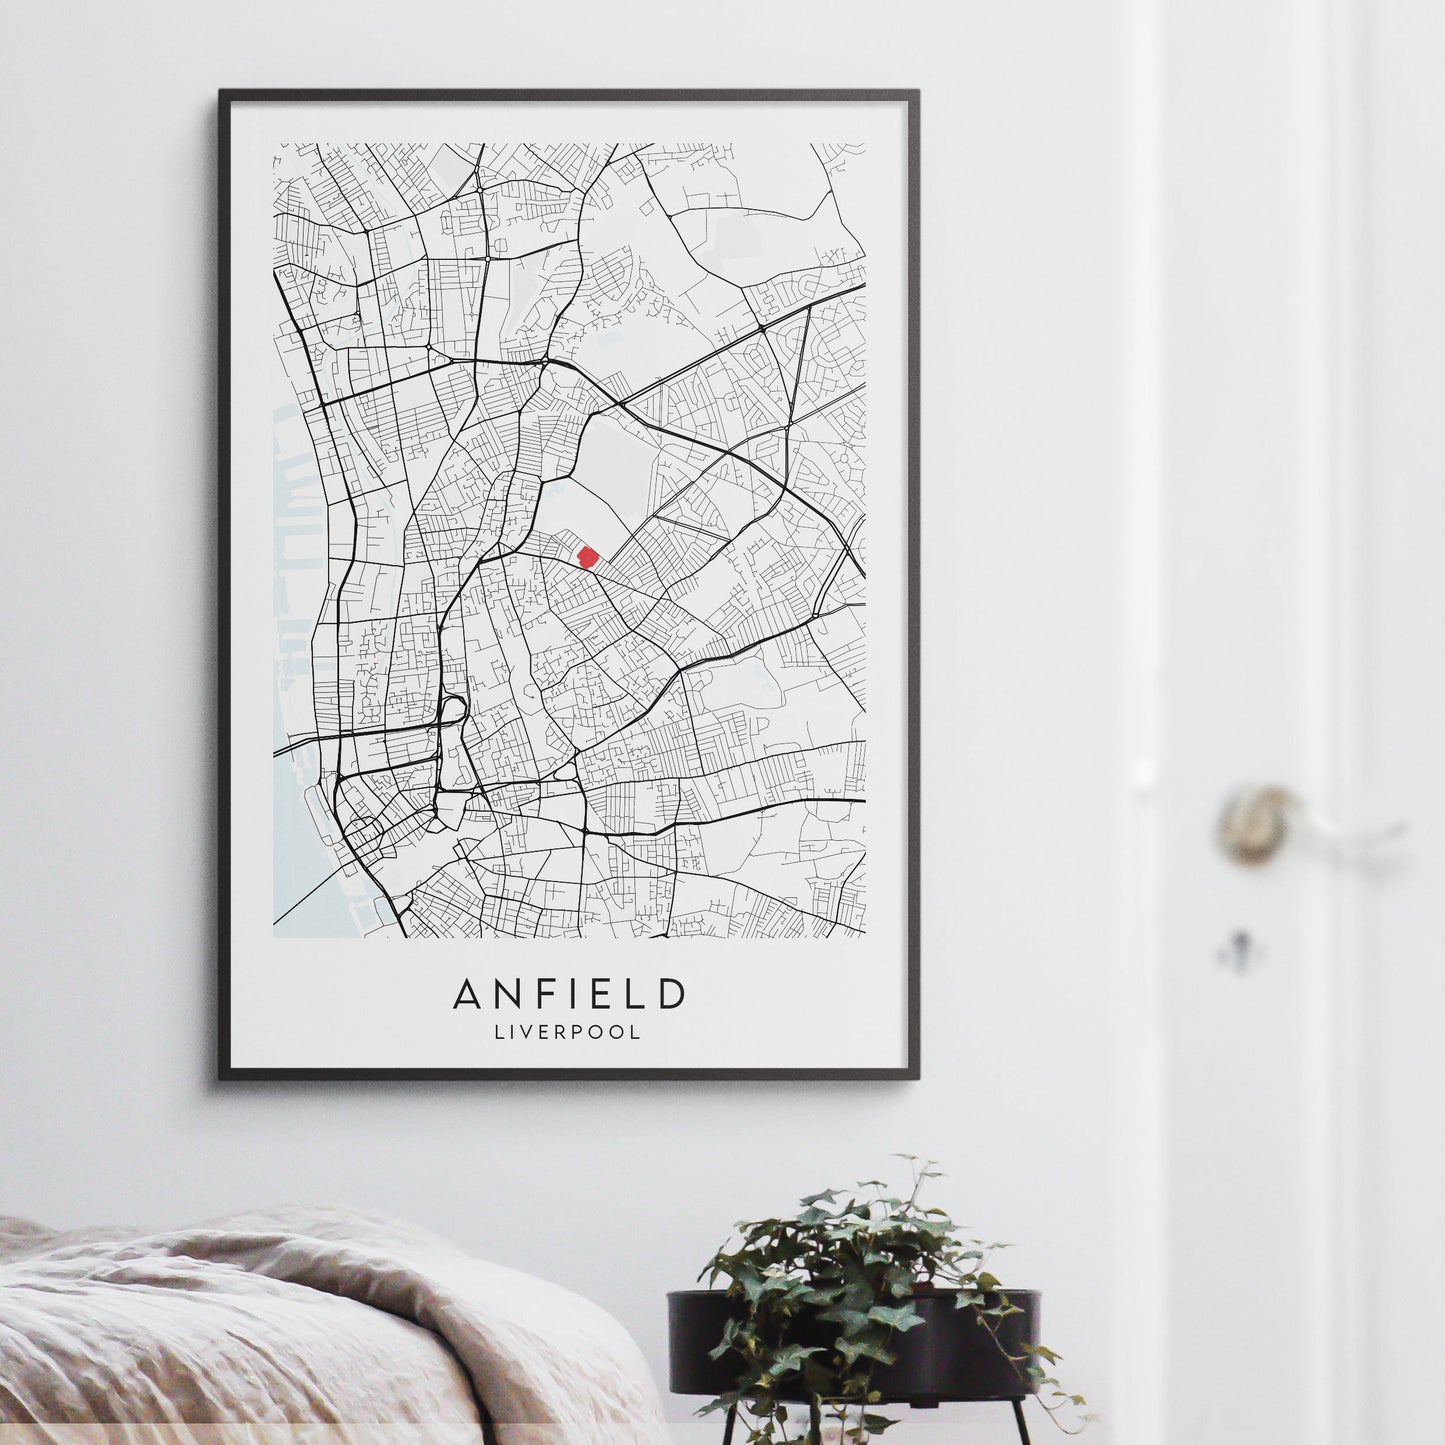 Liverpool FC Poster - Anfield Stadium Football Map